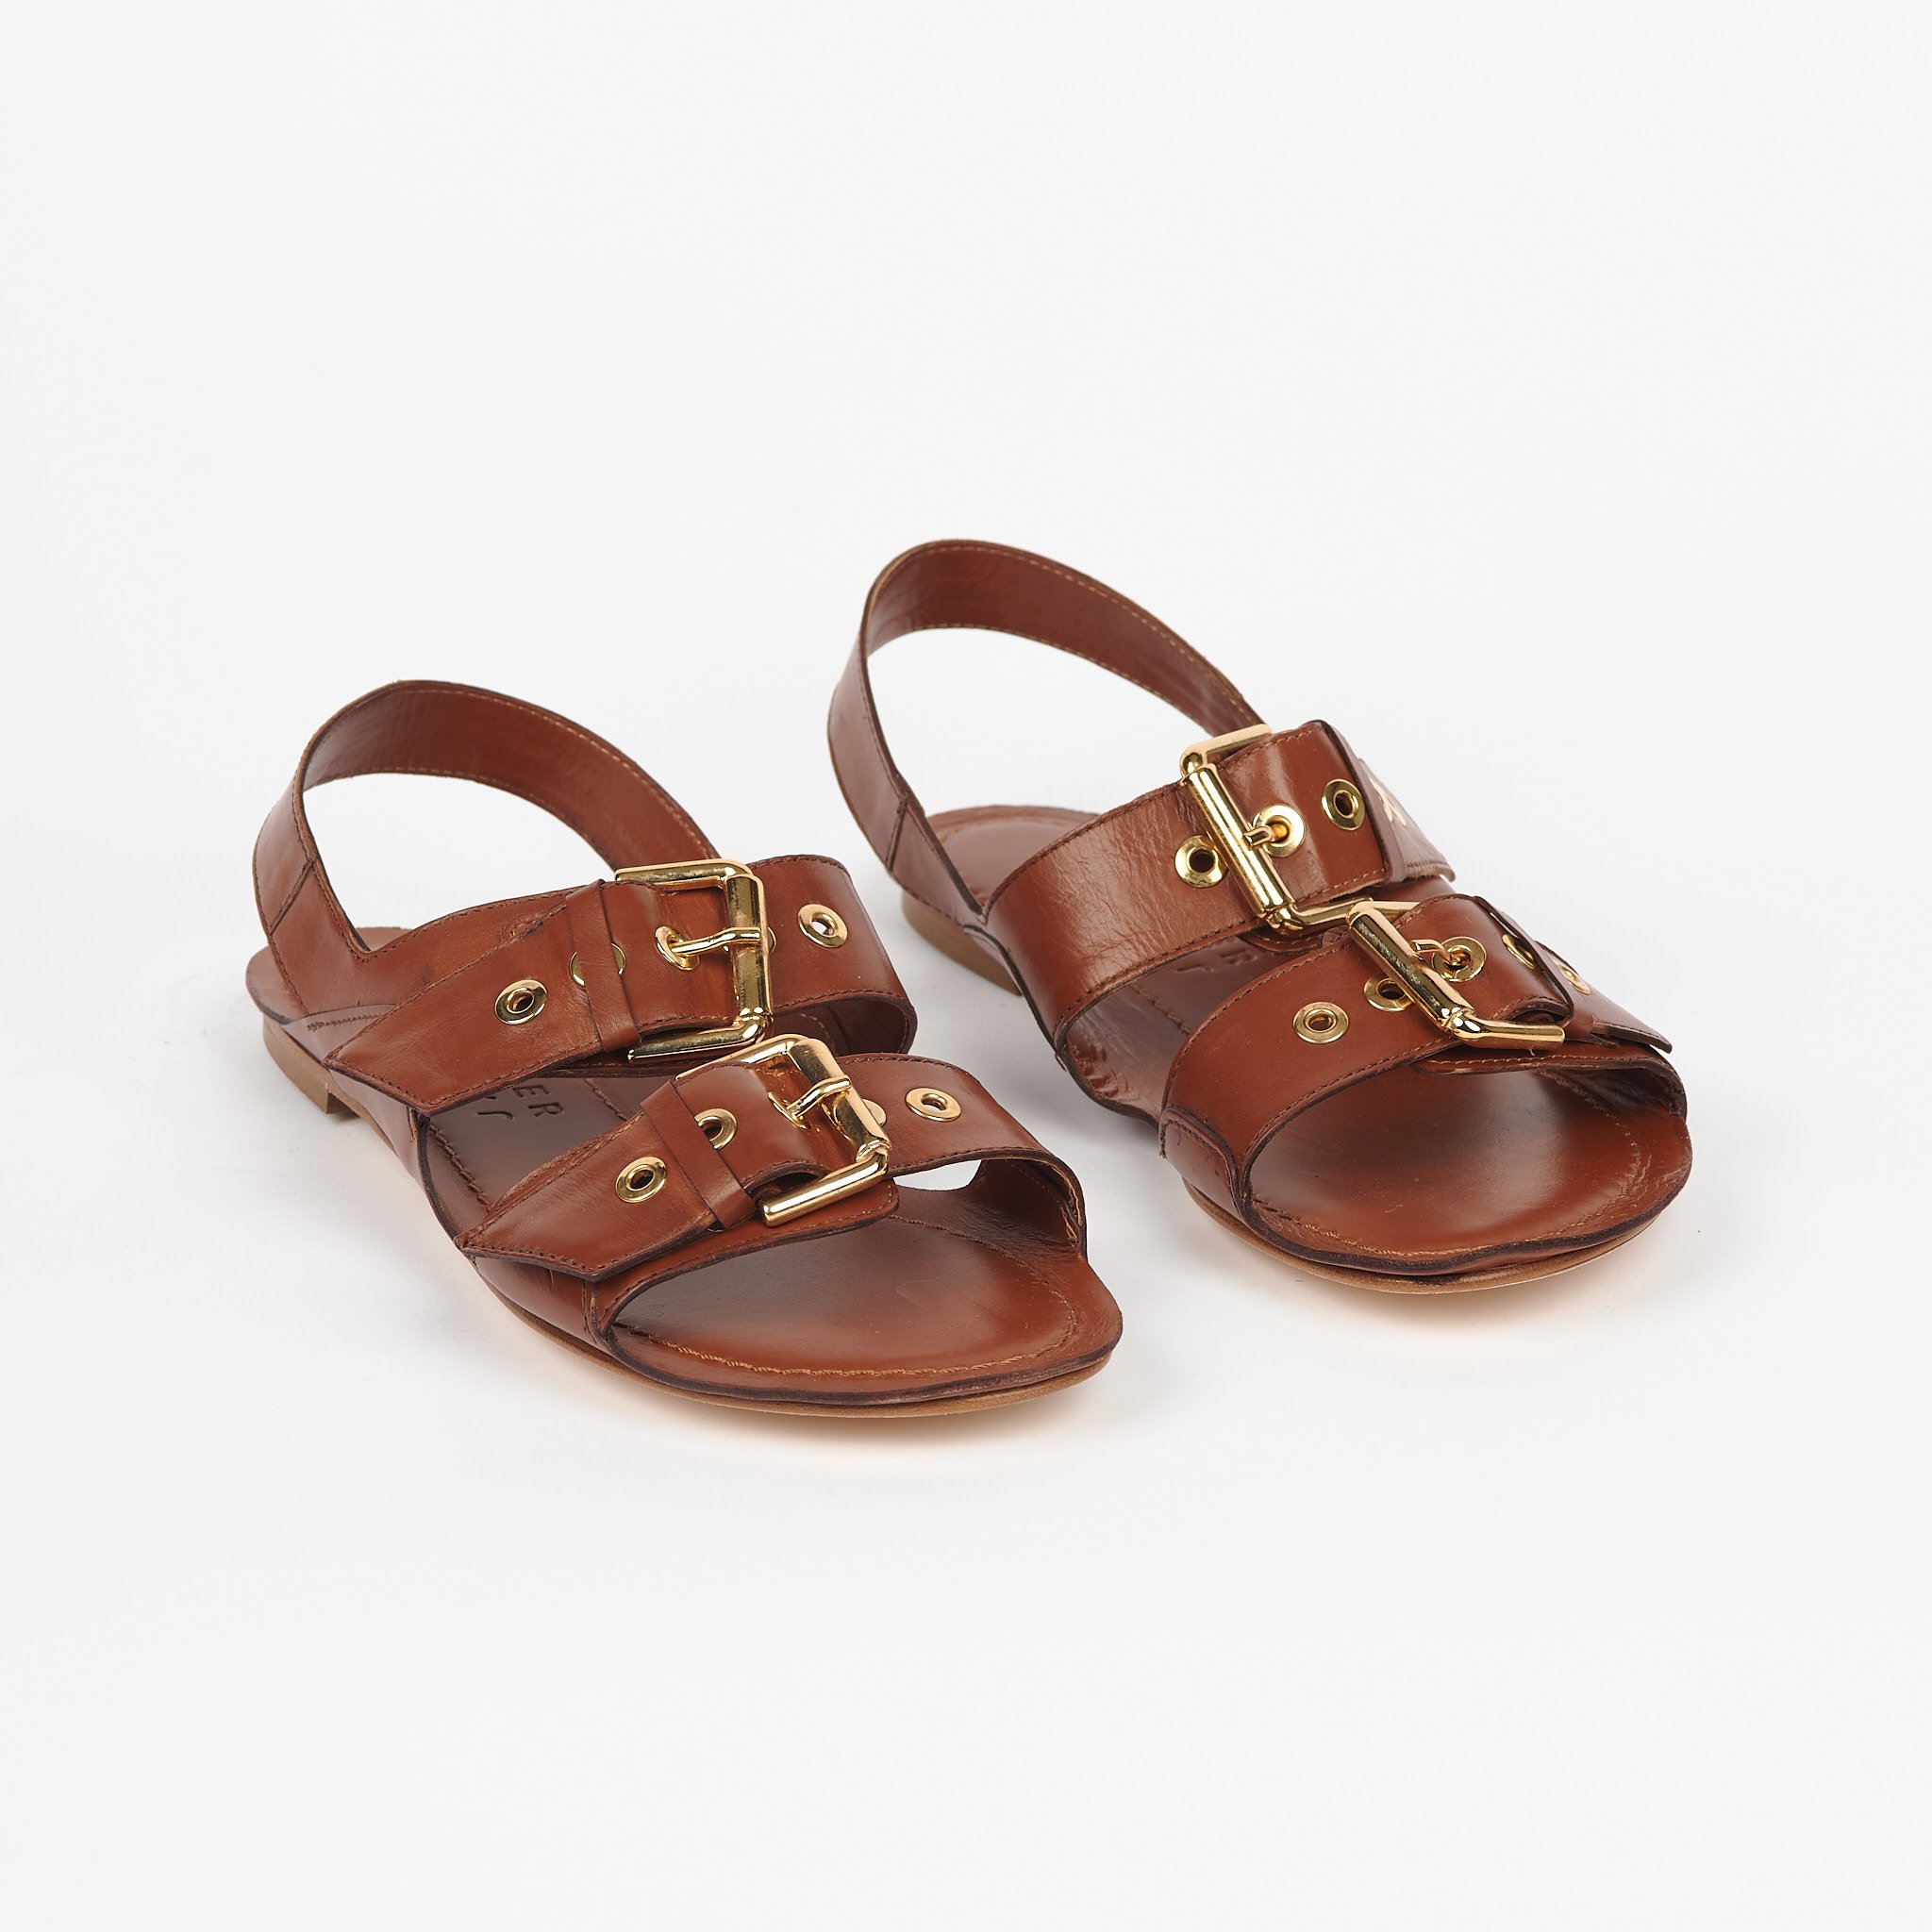 Rubi | Shoes | Rubi Strappy Sandals 4 9 Flats Brown Tan Open Toe Casual  Womens Nwt Summer New | Poshmark